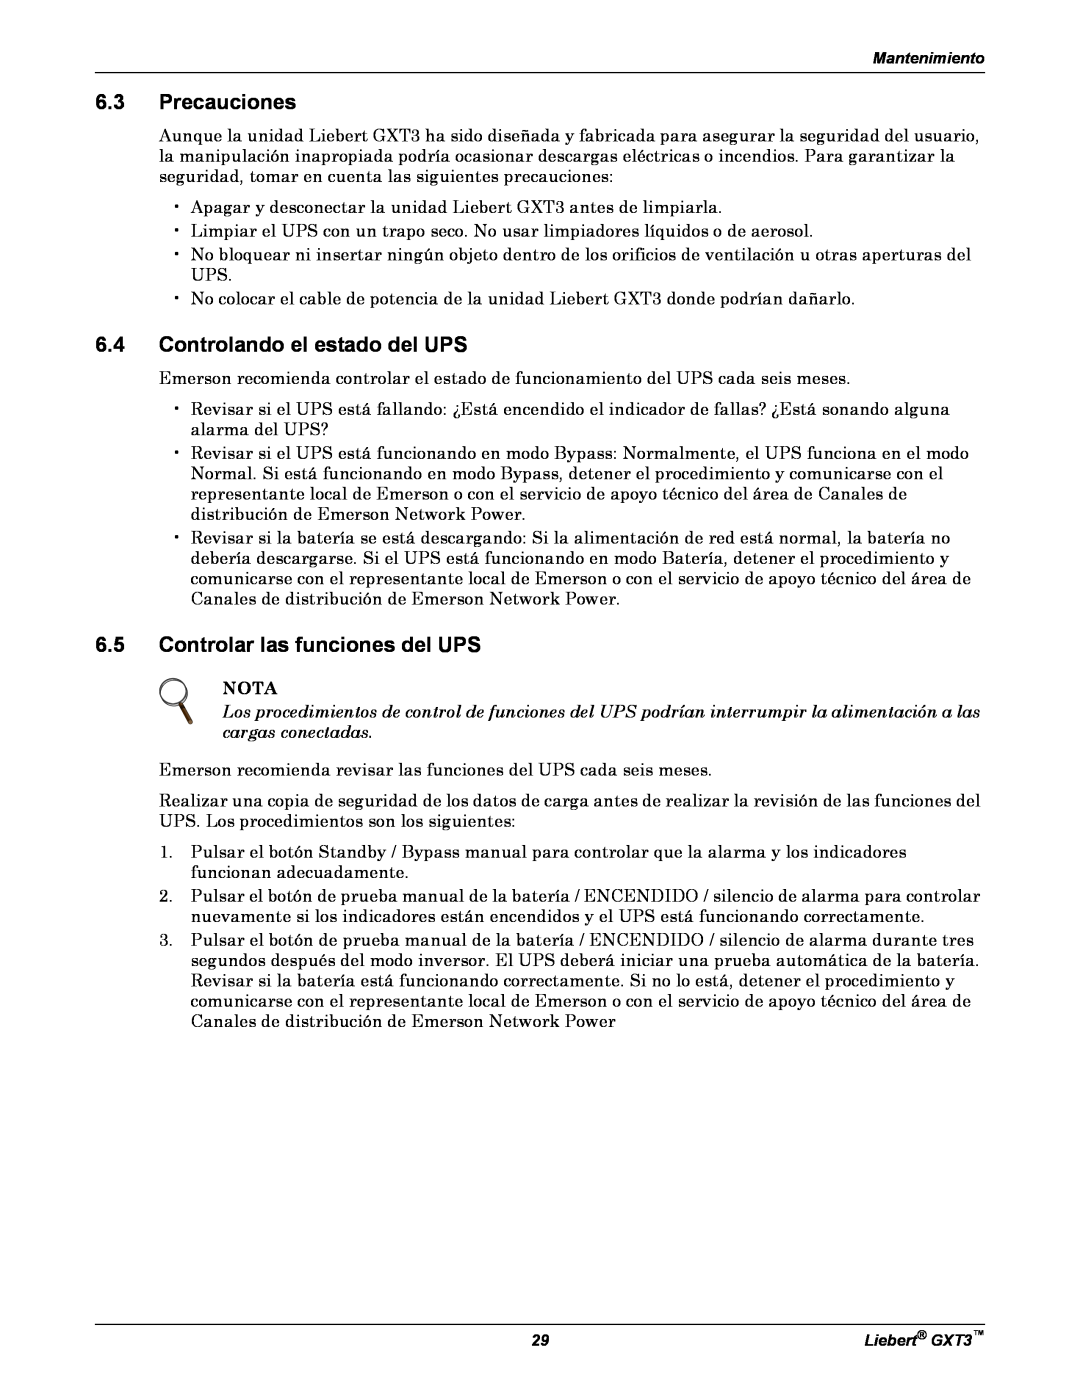 Emerson GXT3 manual Precauciones, Controlando el estado del UPS, Controlar las funciones del UPS, Nota 